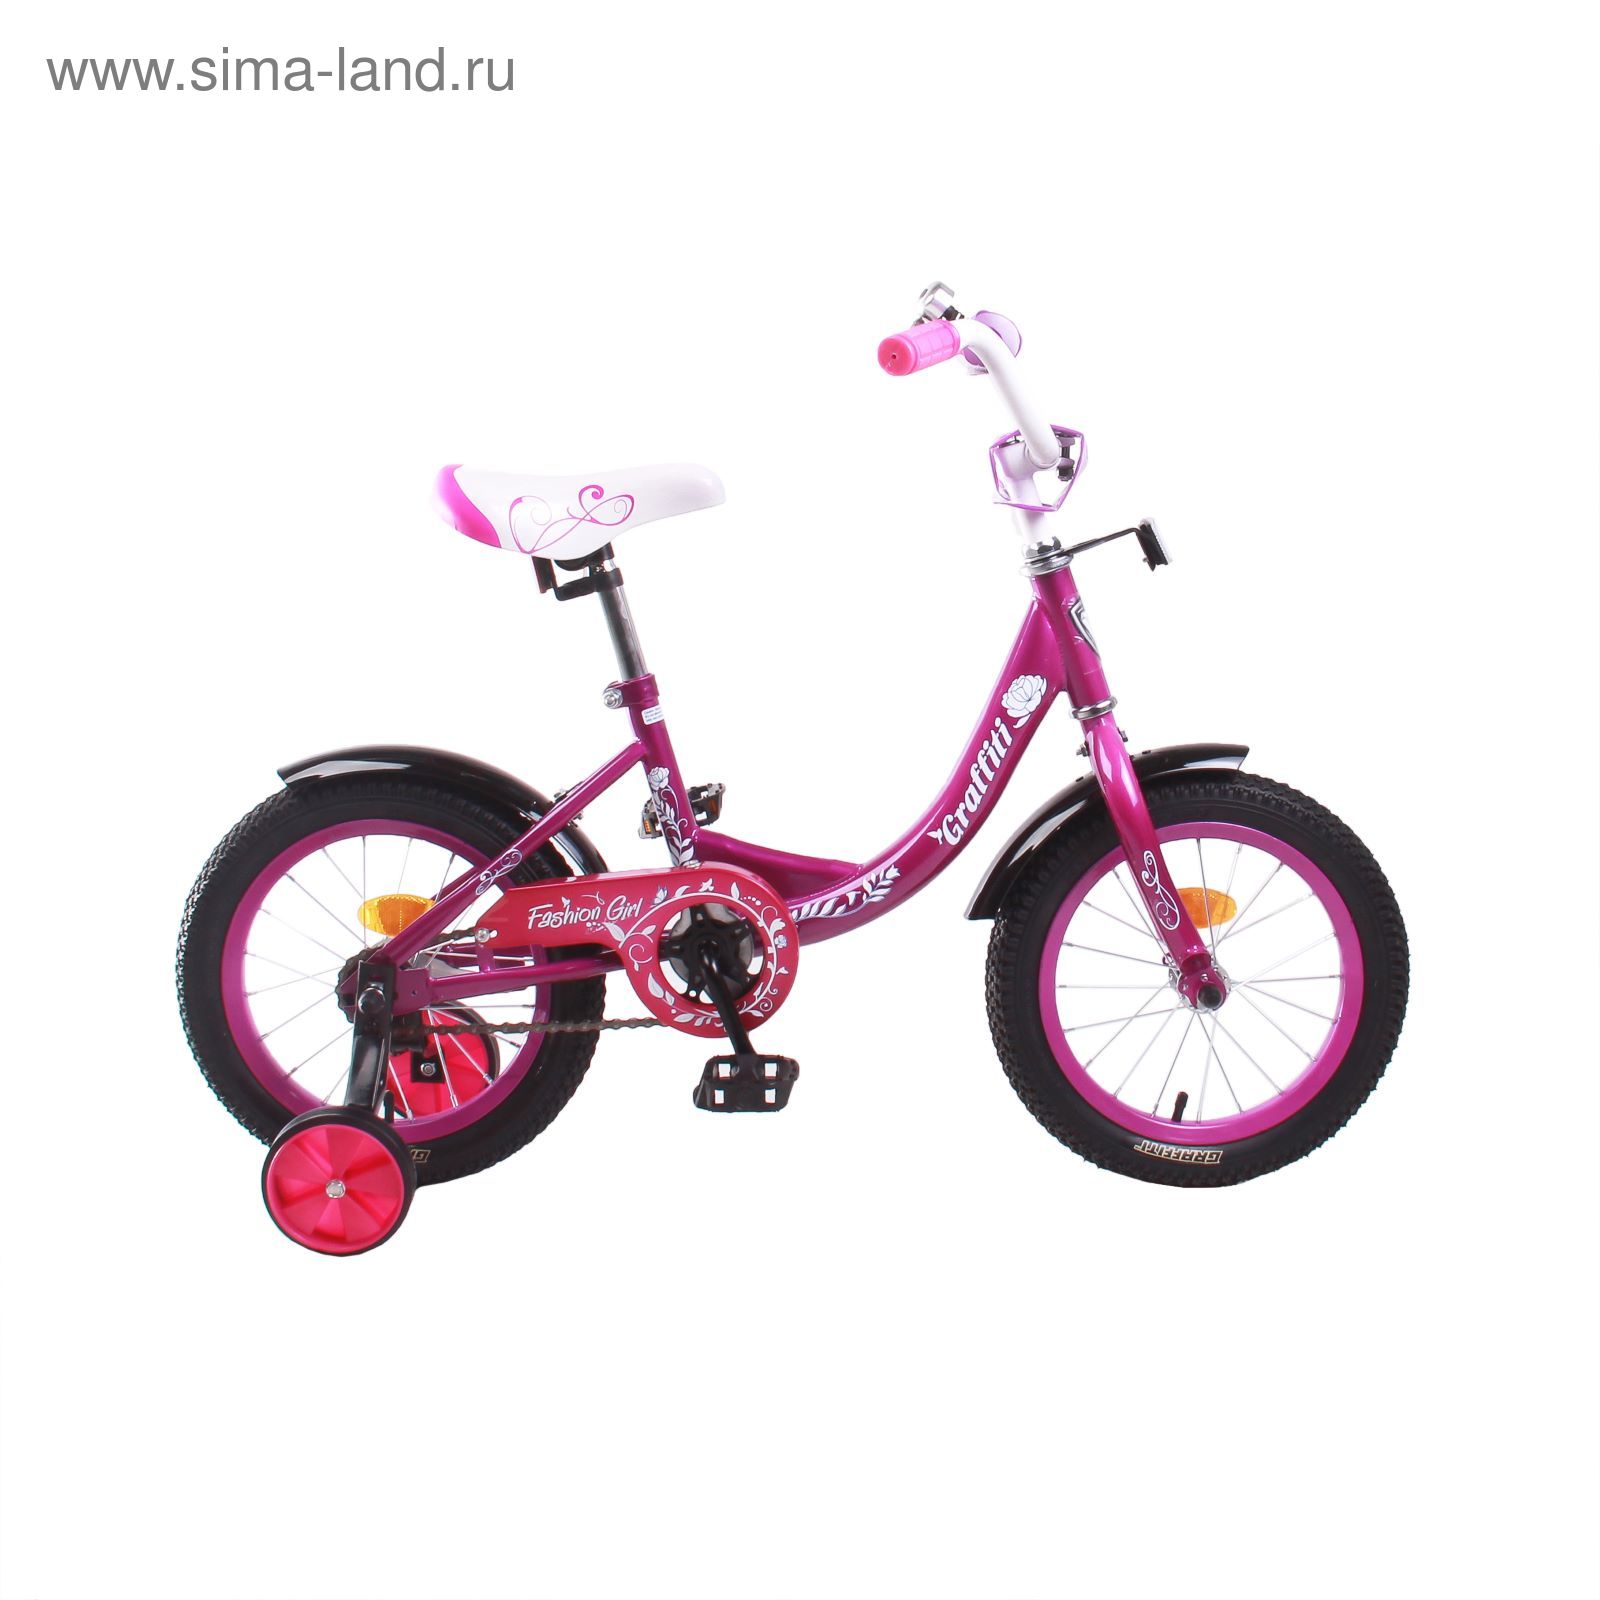 Велосипед 14" GRAFFITI Fashion Girl RUS, 2017, цвет фиолетовый